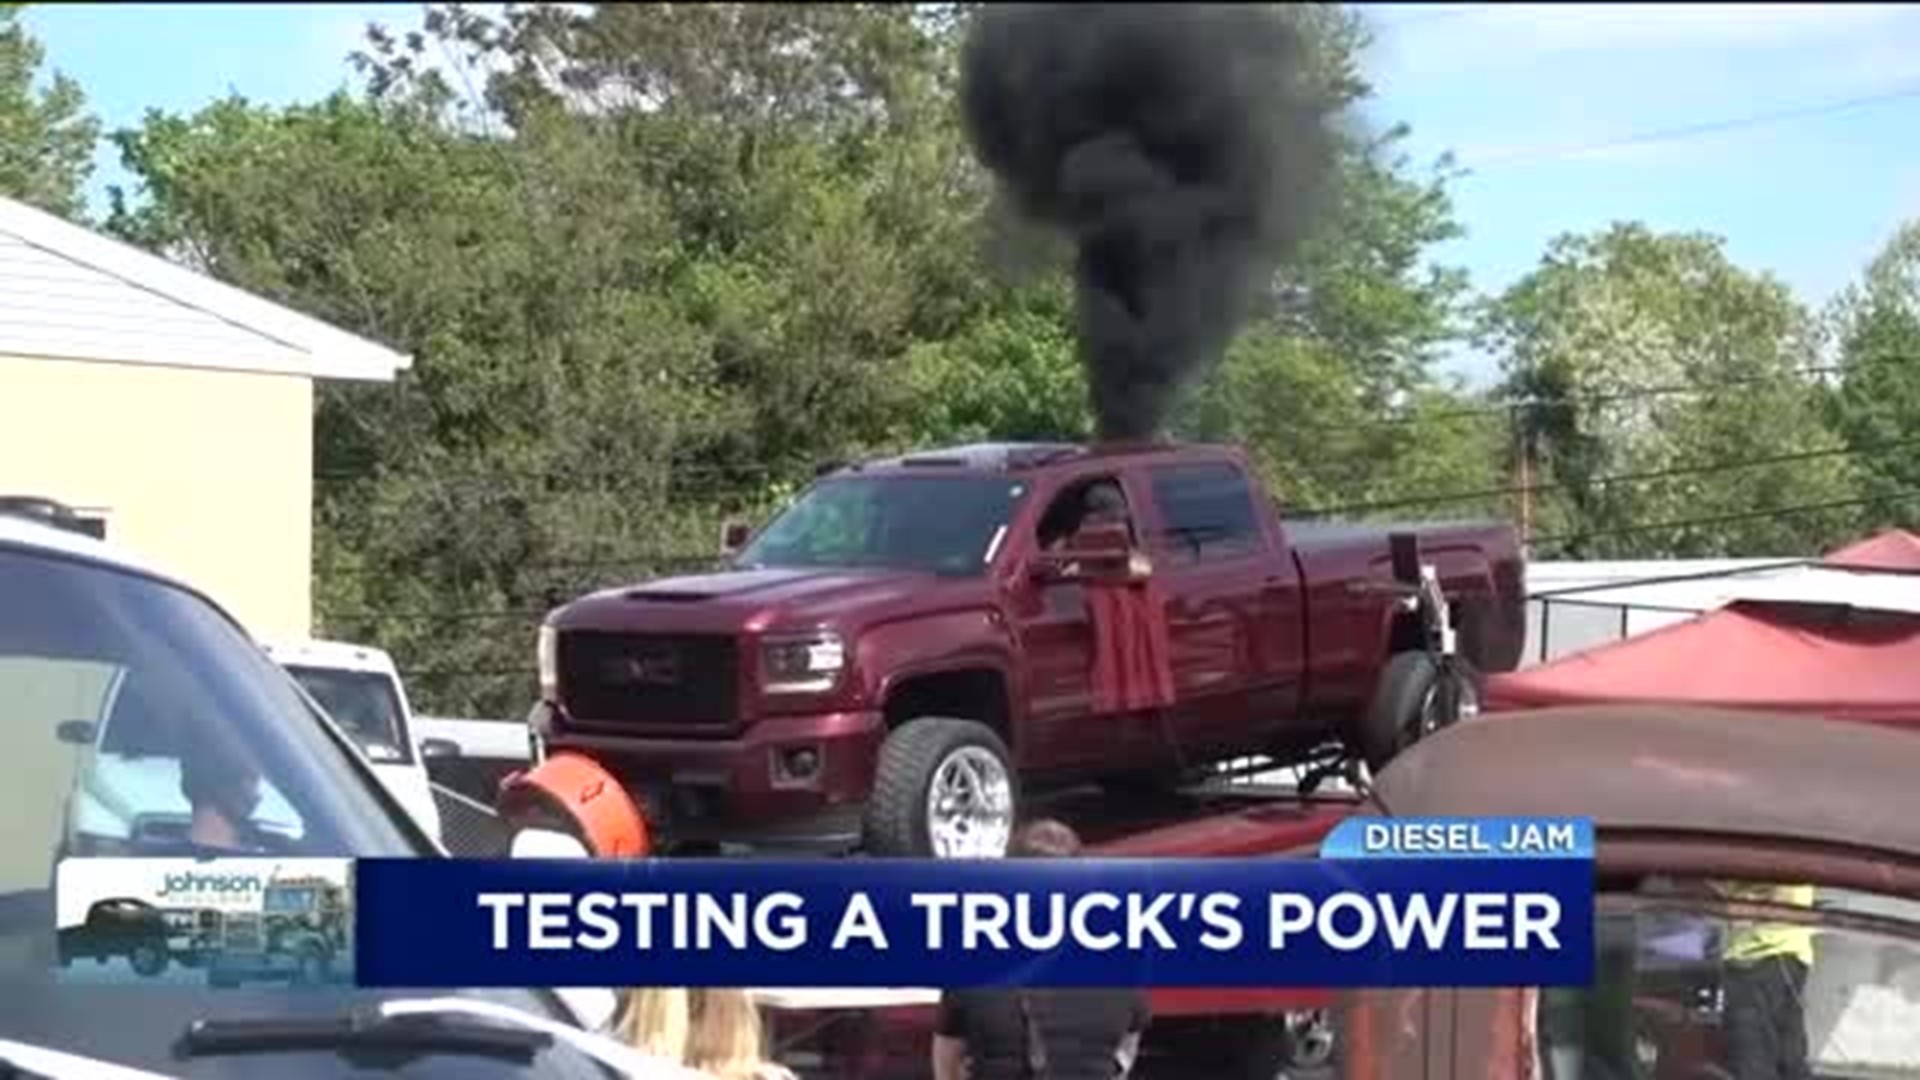 Diesel Jam: Testing a Truck's Power